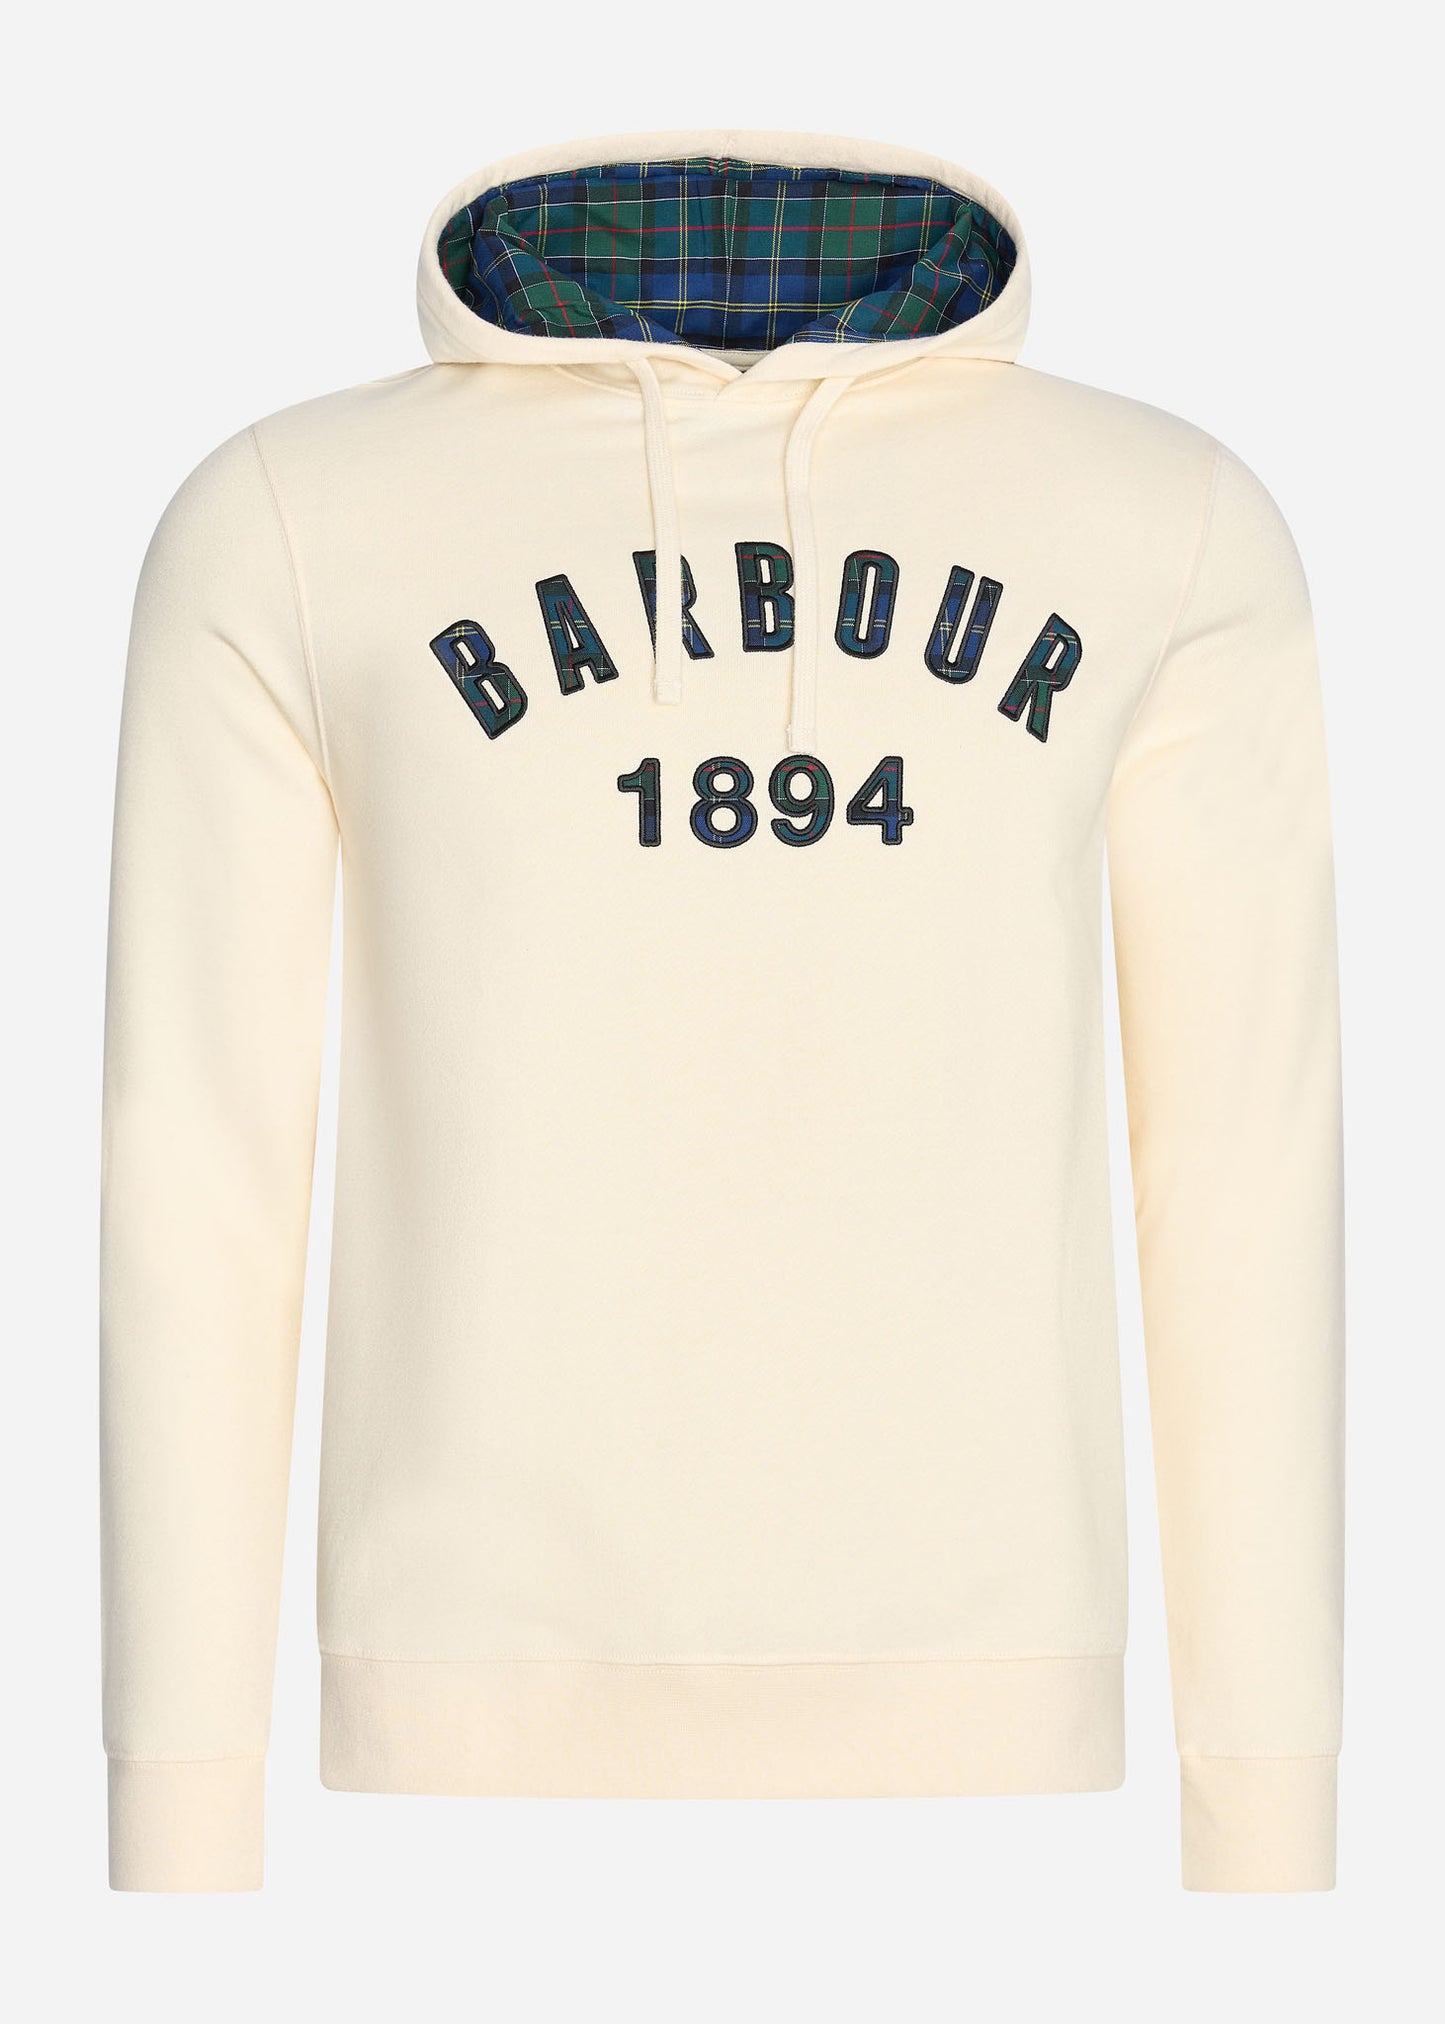 Barbour hoodie neutral off-white beige